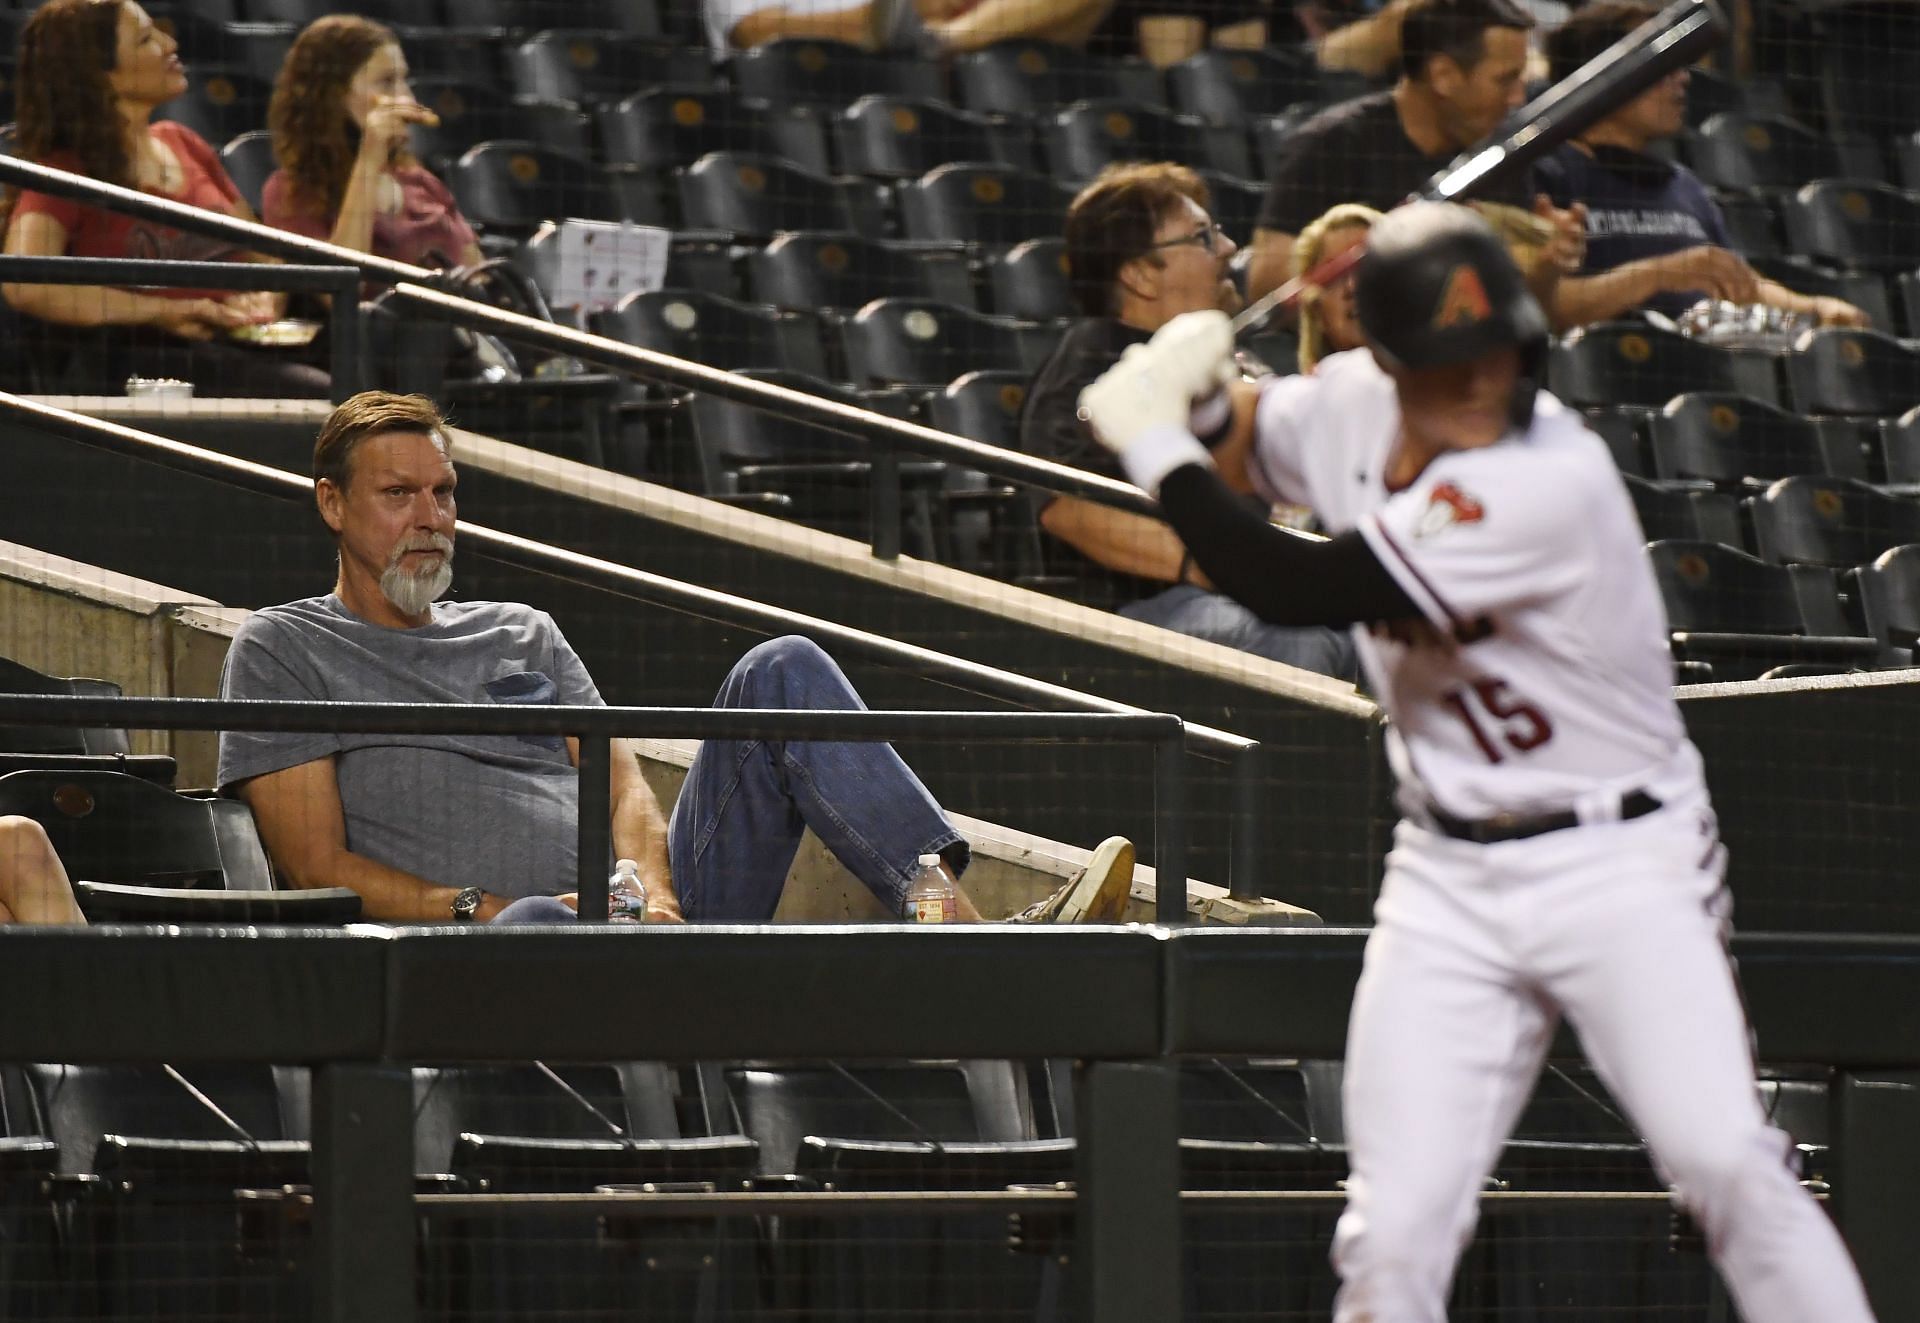 Baseball: Randy Johnson finds fascination after baseball, Sports